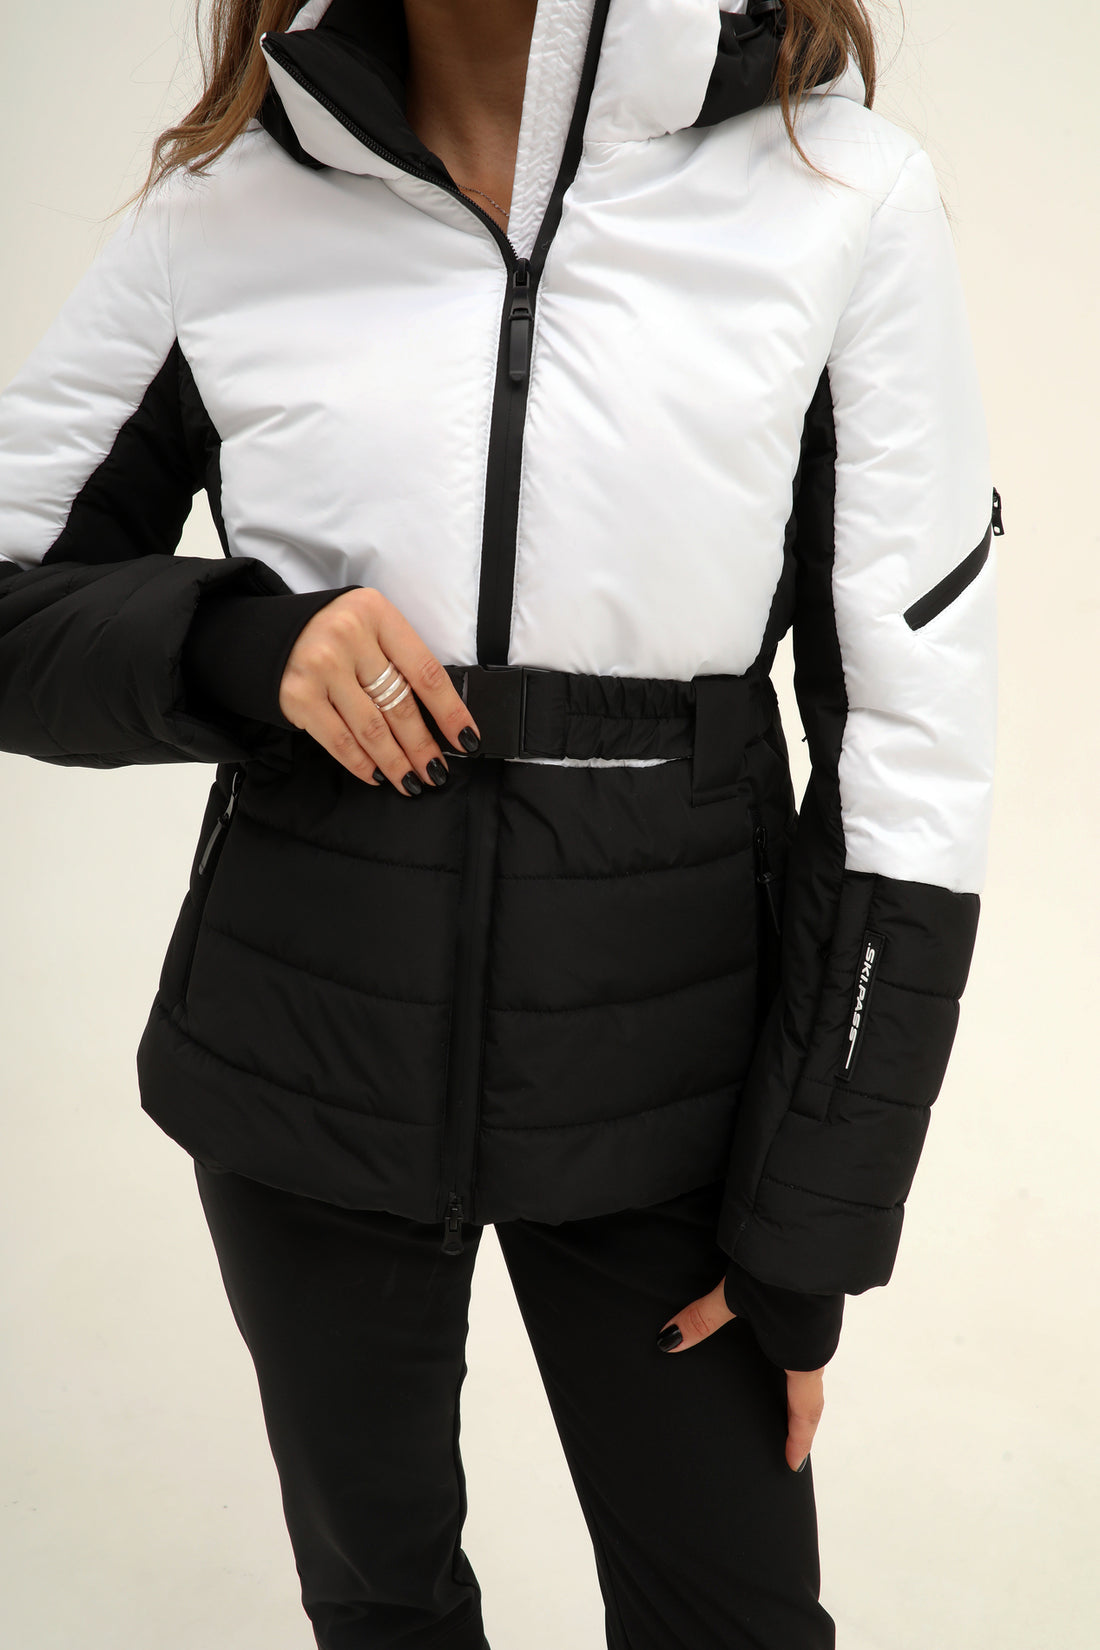 Black two piece ski outfit - Monte Rosa Black - Black ski suit